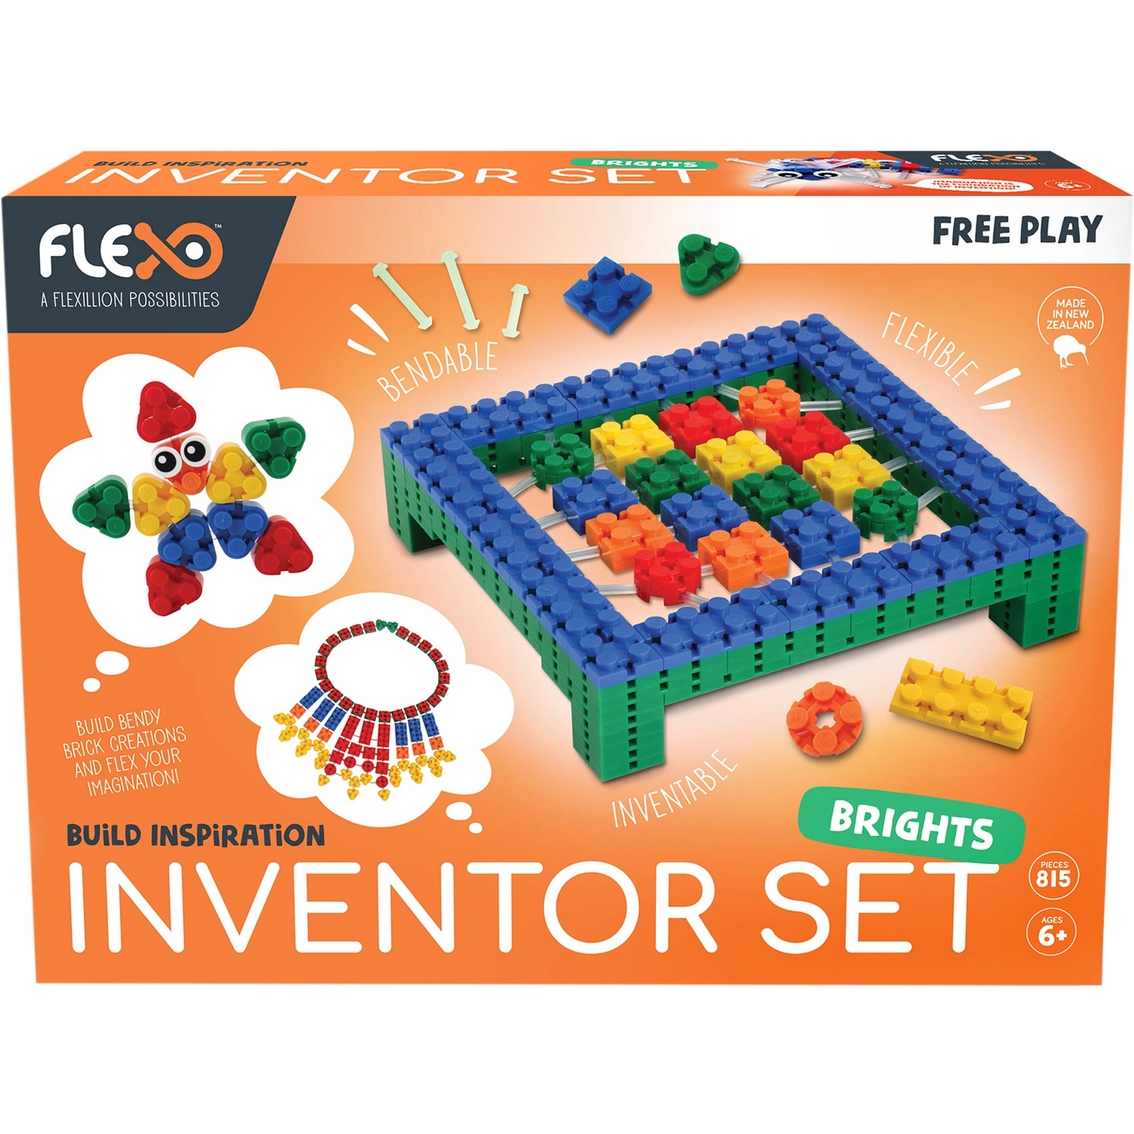 License 2 Play Flexo Free Play Inventor Set Brights Trampoline